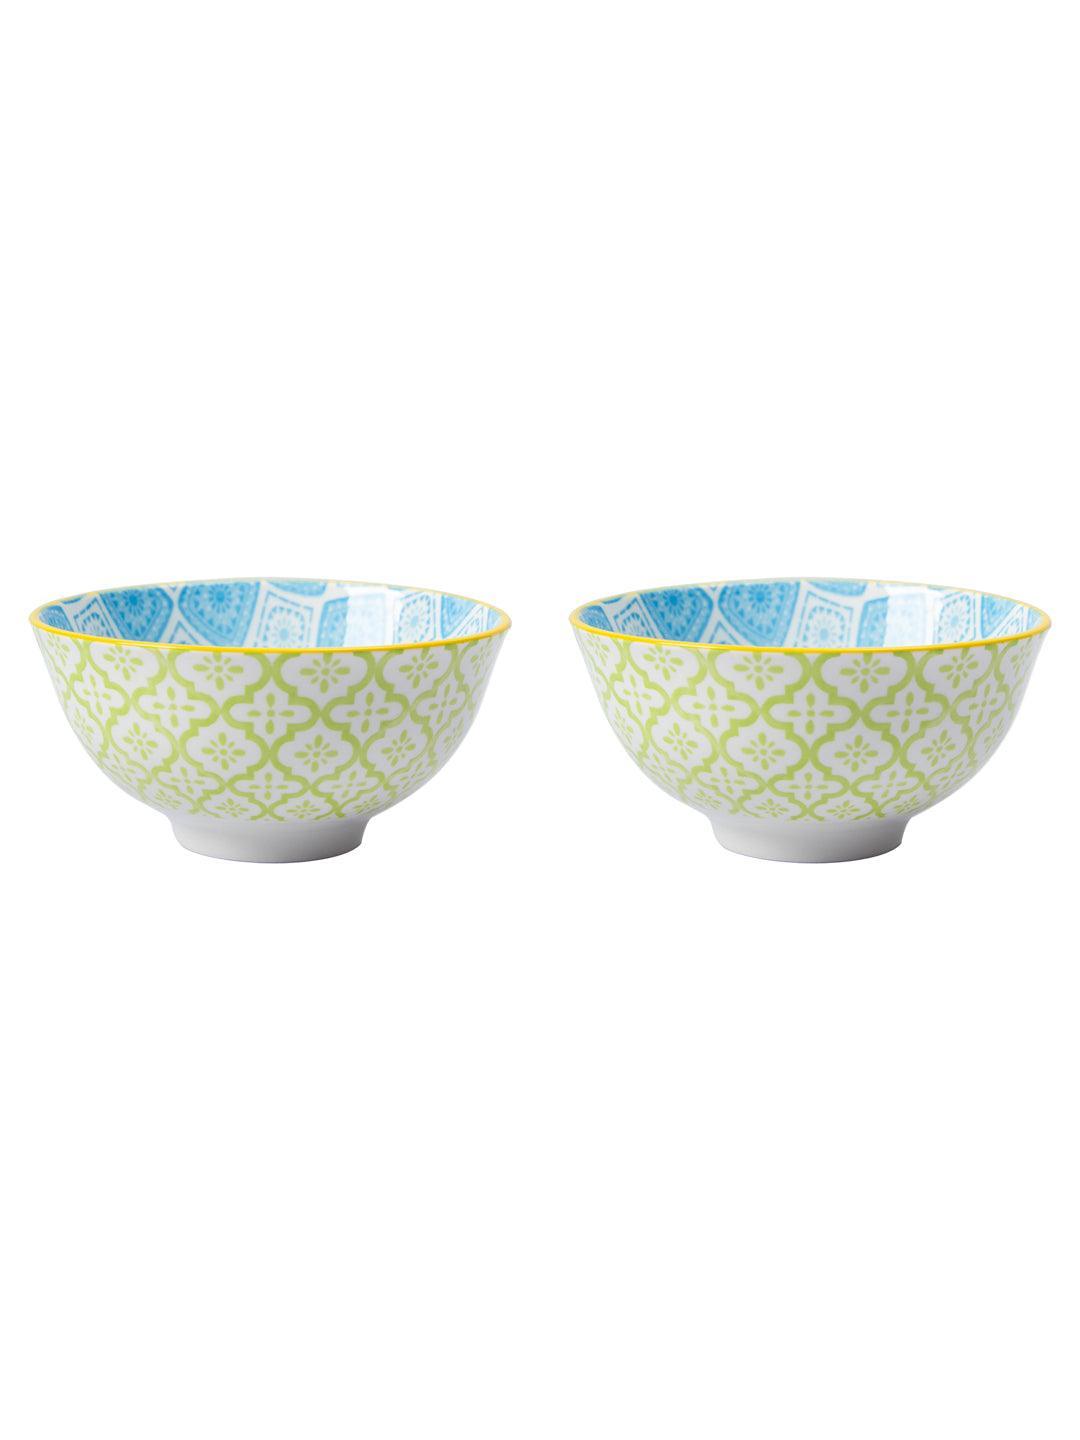 Bowls, Serving Bowl Set, Light Green, Ceramic, Set of 2, 360 mL - MARKET 99